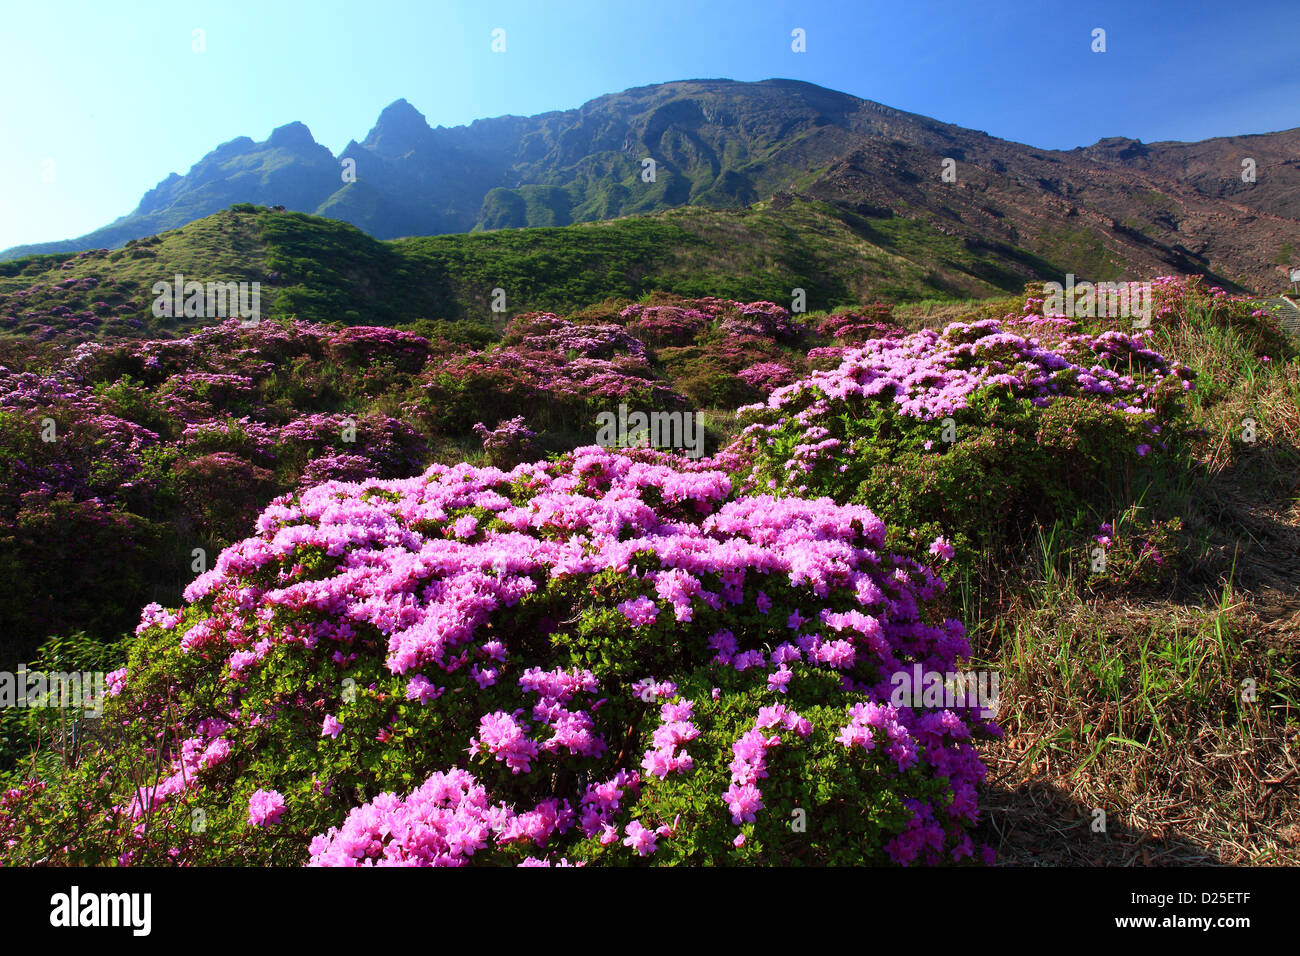 Rhododendron field at Sensui gorge, Kumamoto Prefecture Stock Photo